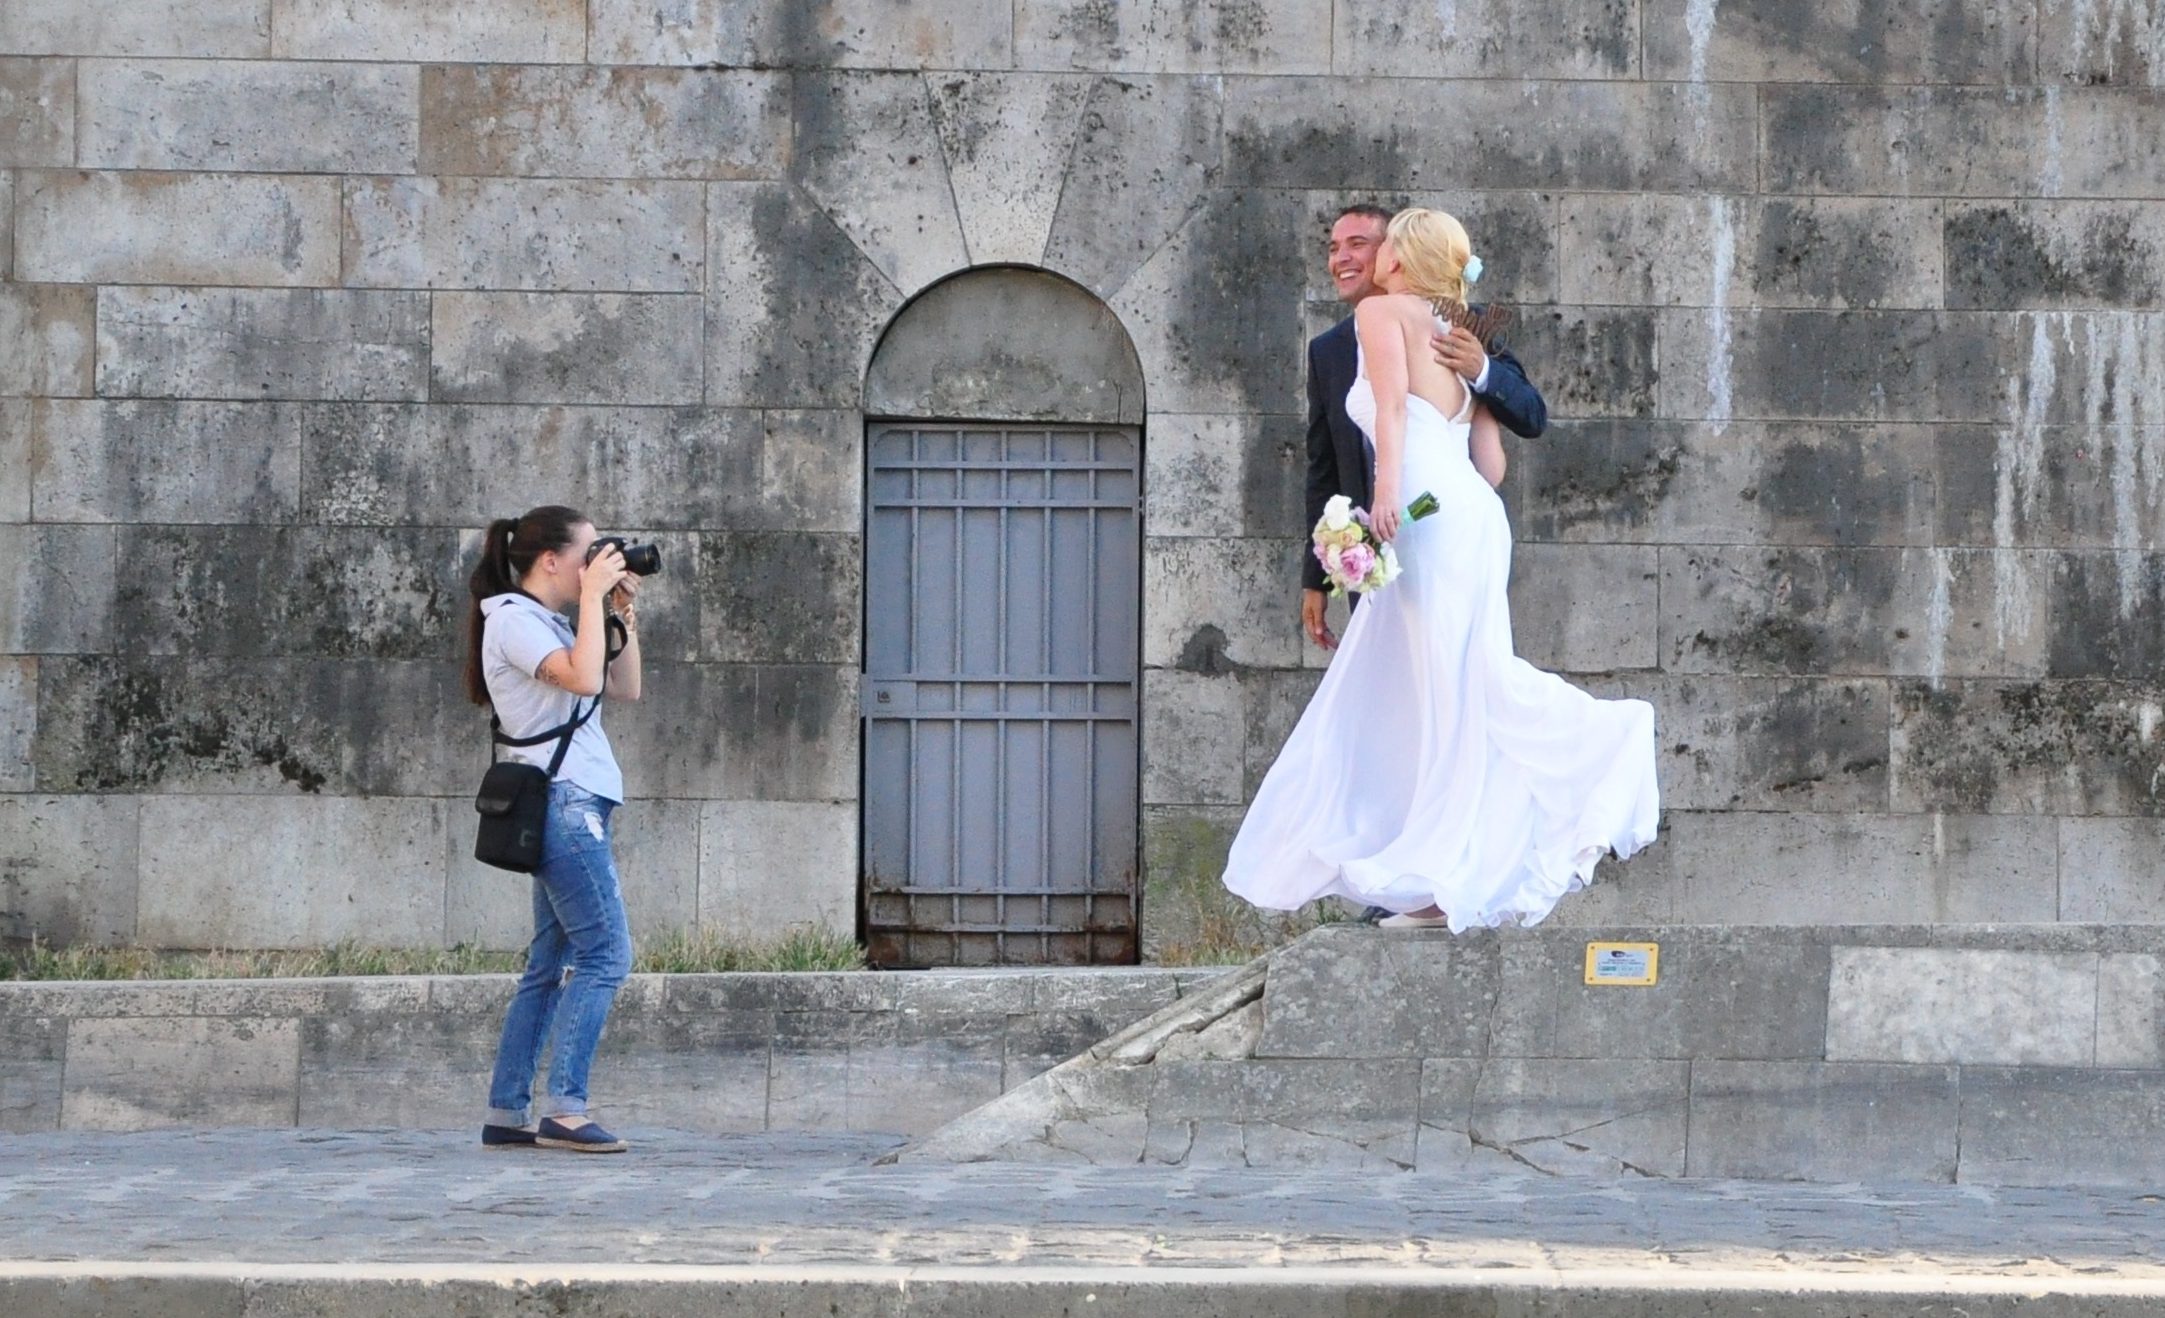 10 Ways To Look Amazing In Your Wedding Photos